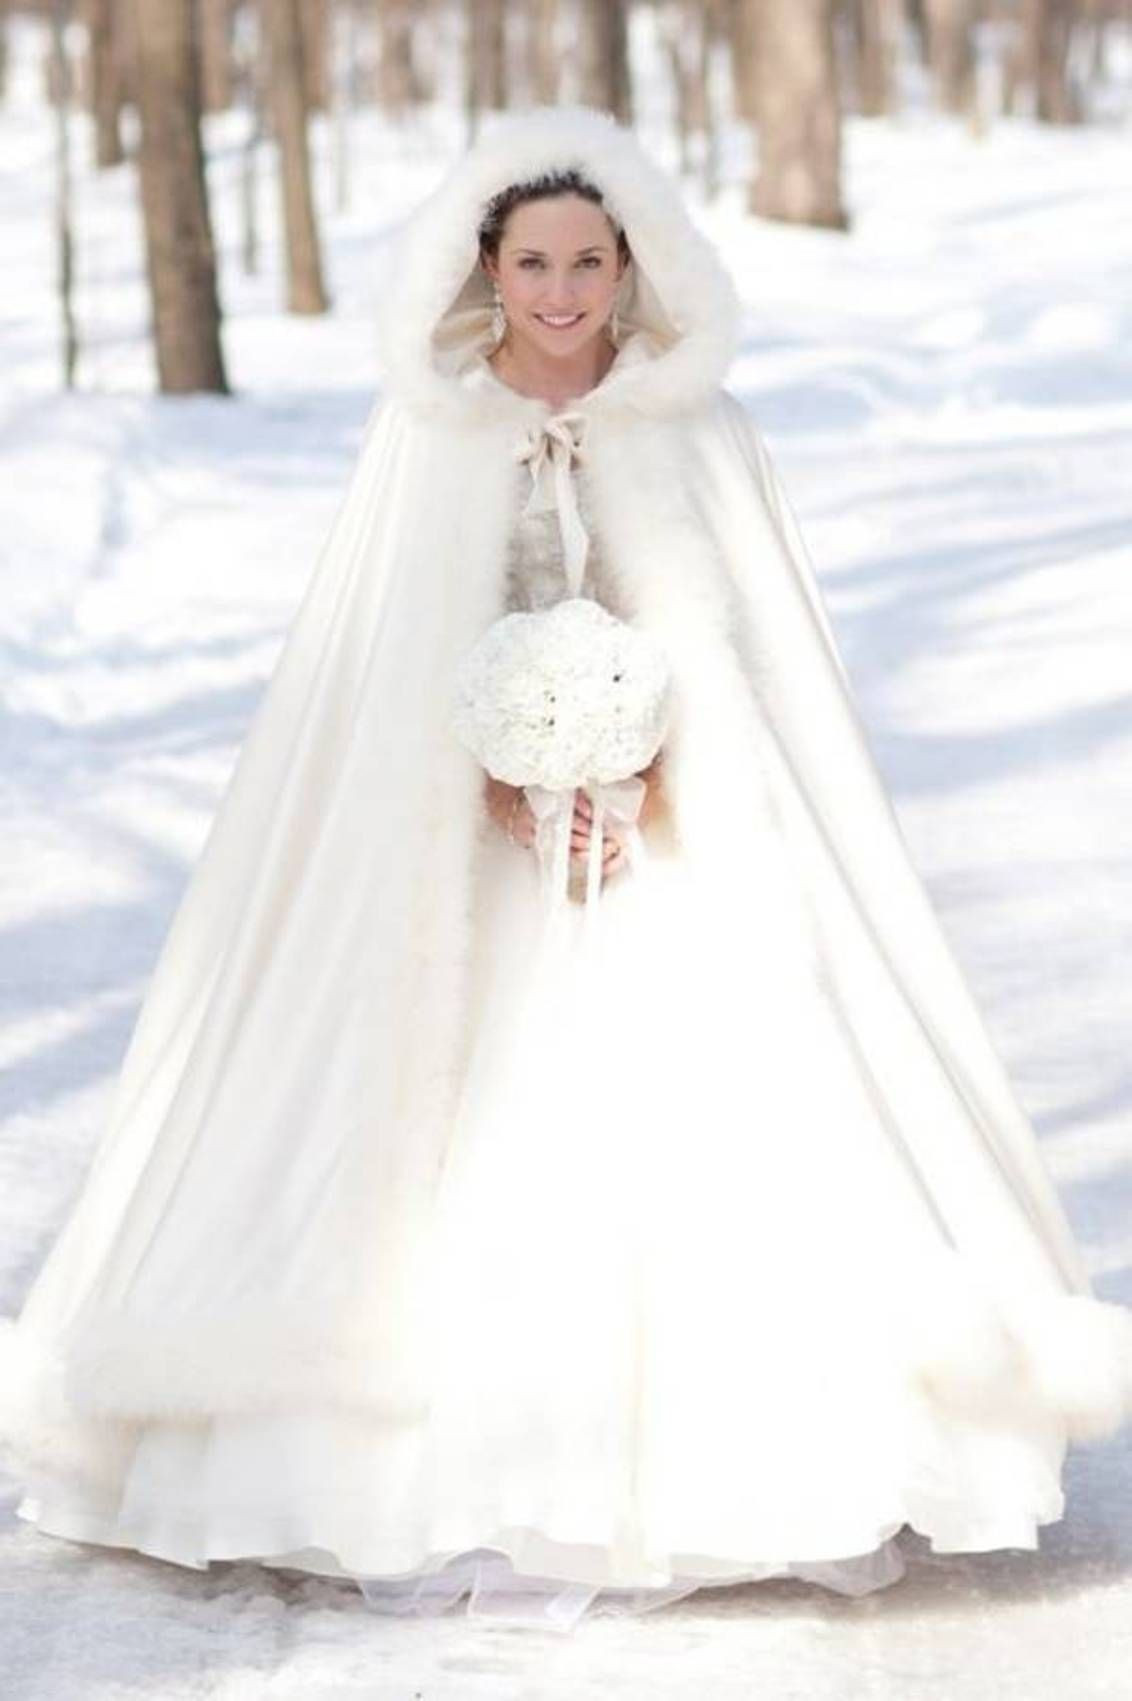 Winter Hochzeitskleid
 Why Winter Weddings Are So Romantic